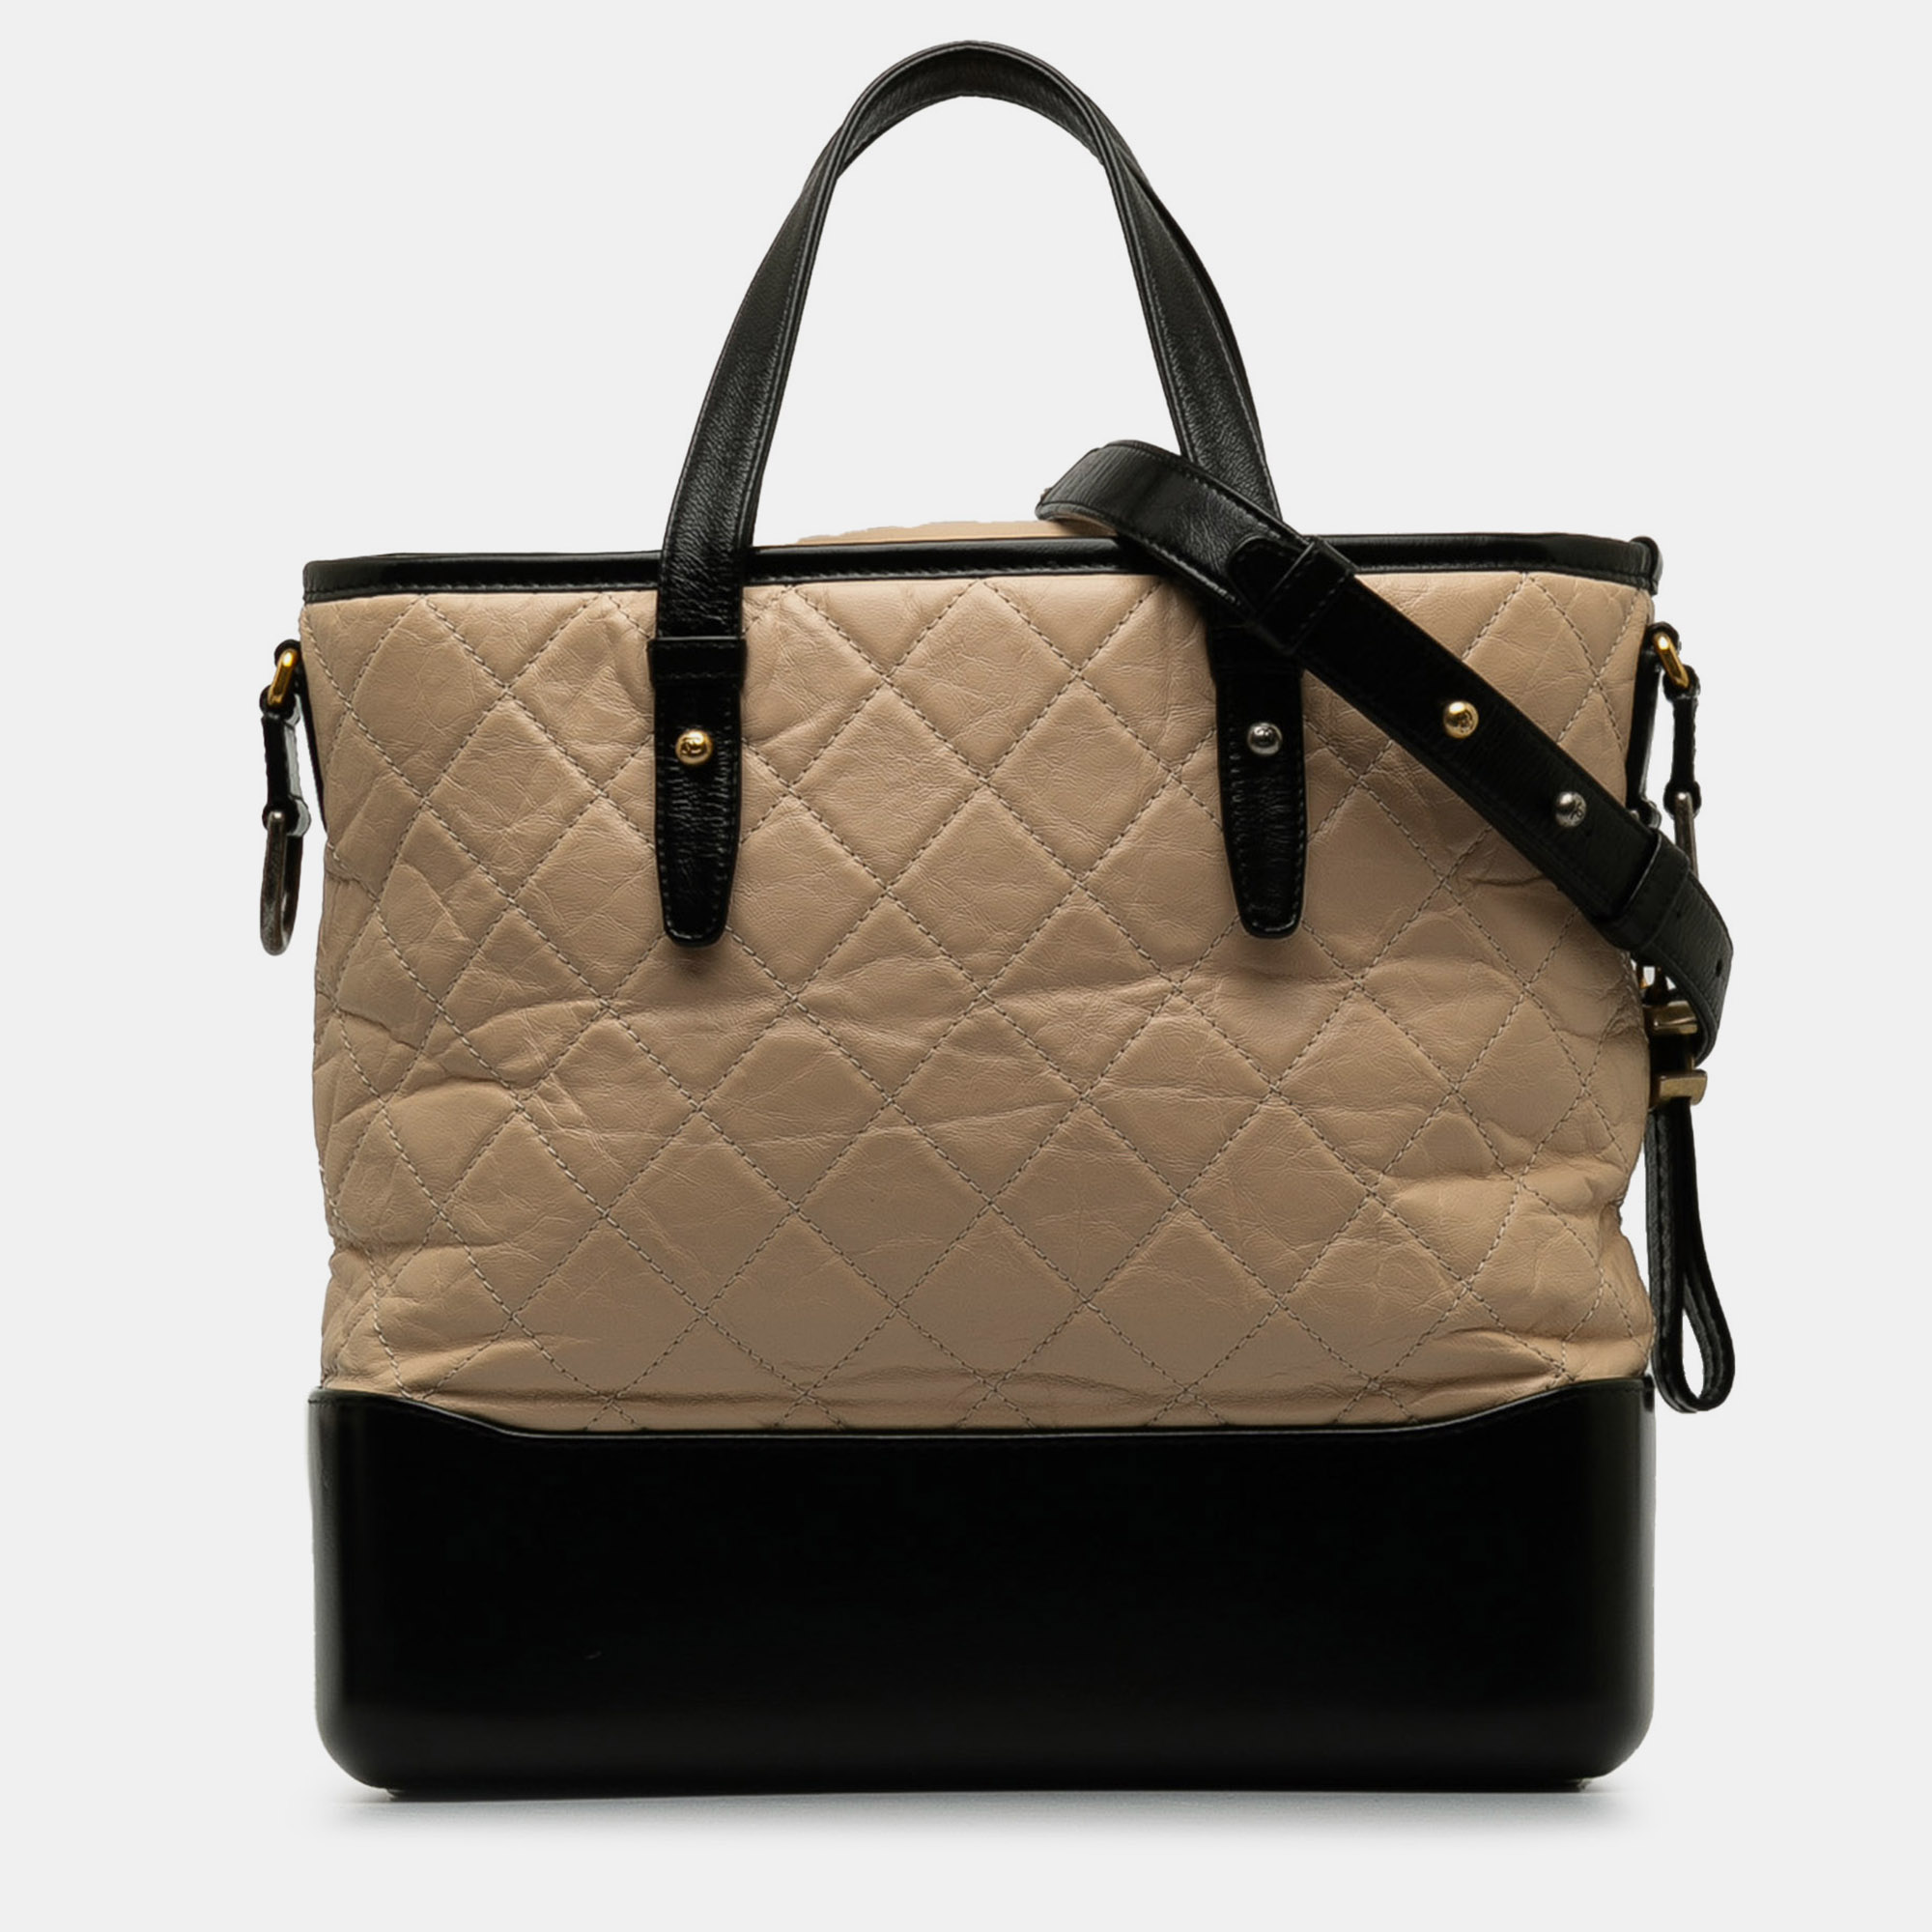 Chanel large gabrielle shopping satchel